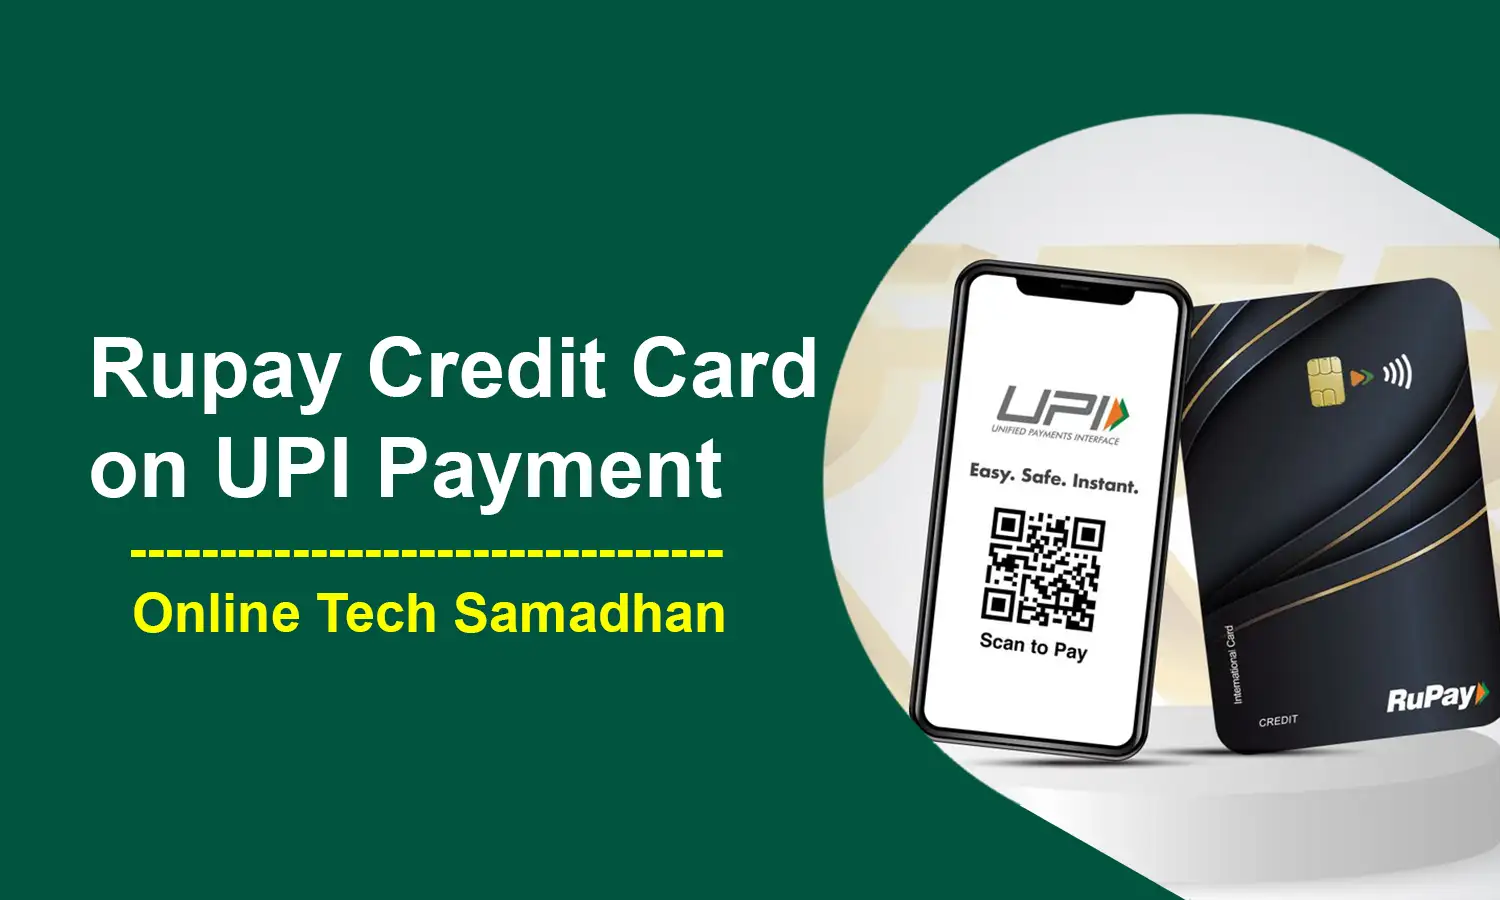 Rupay Credit Card on UPI